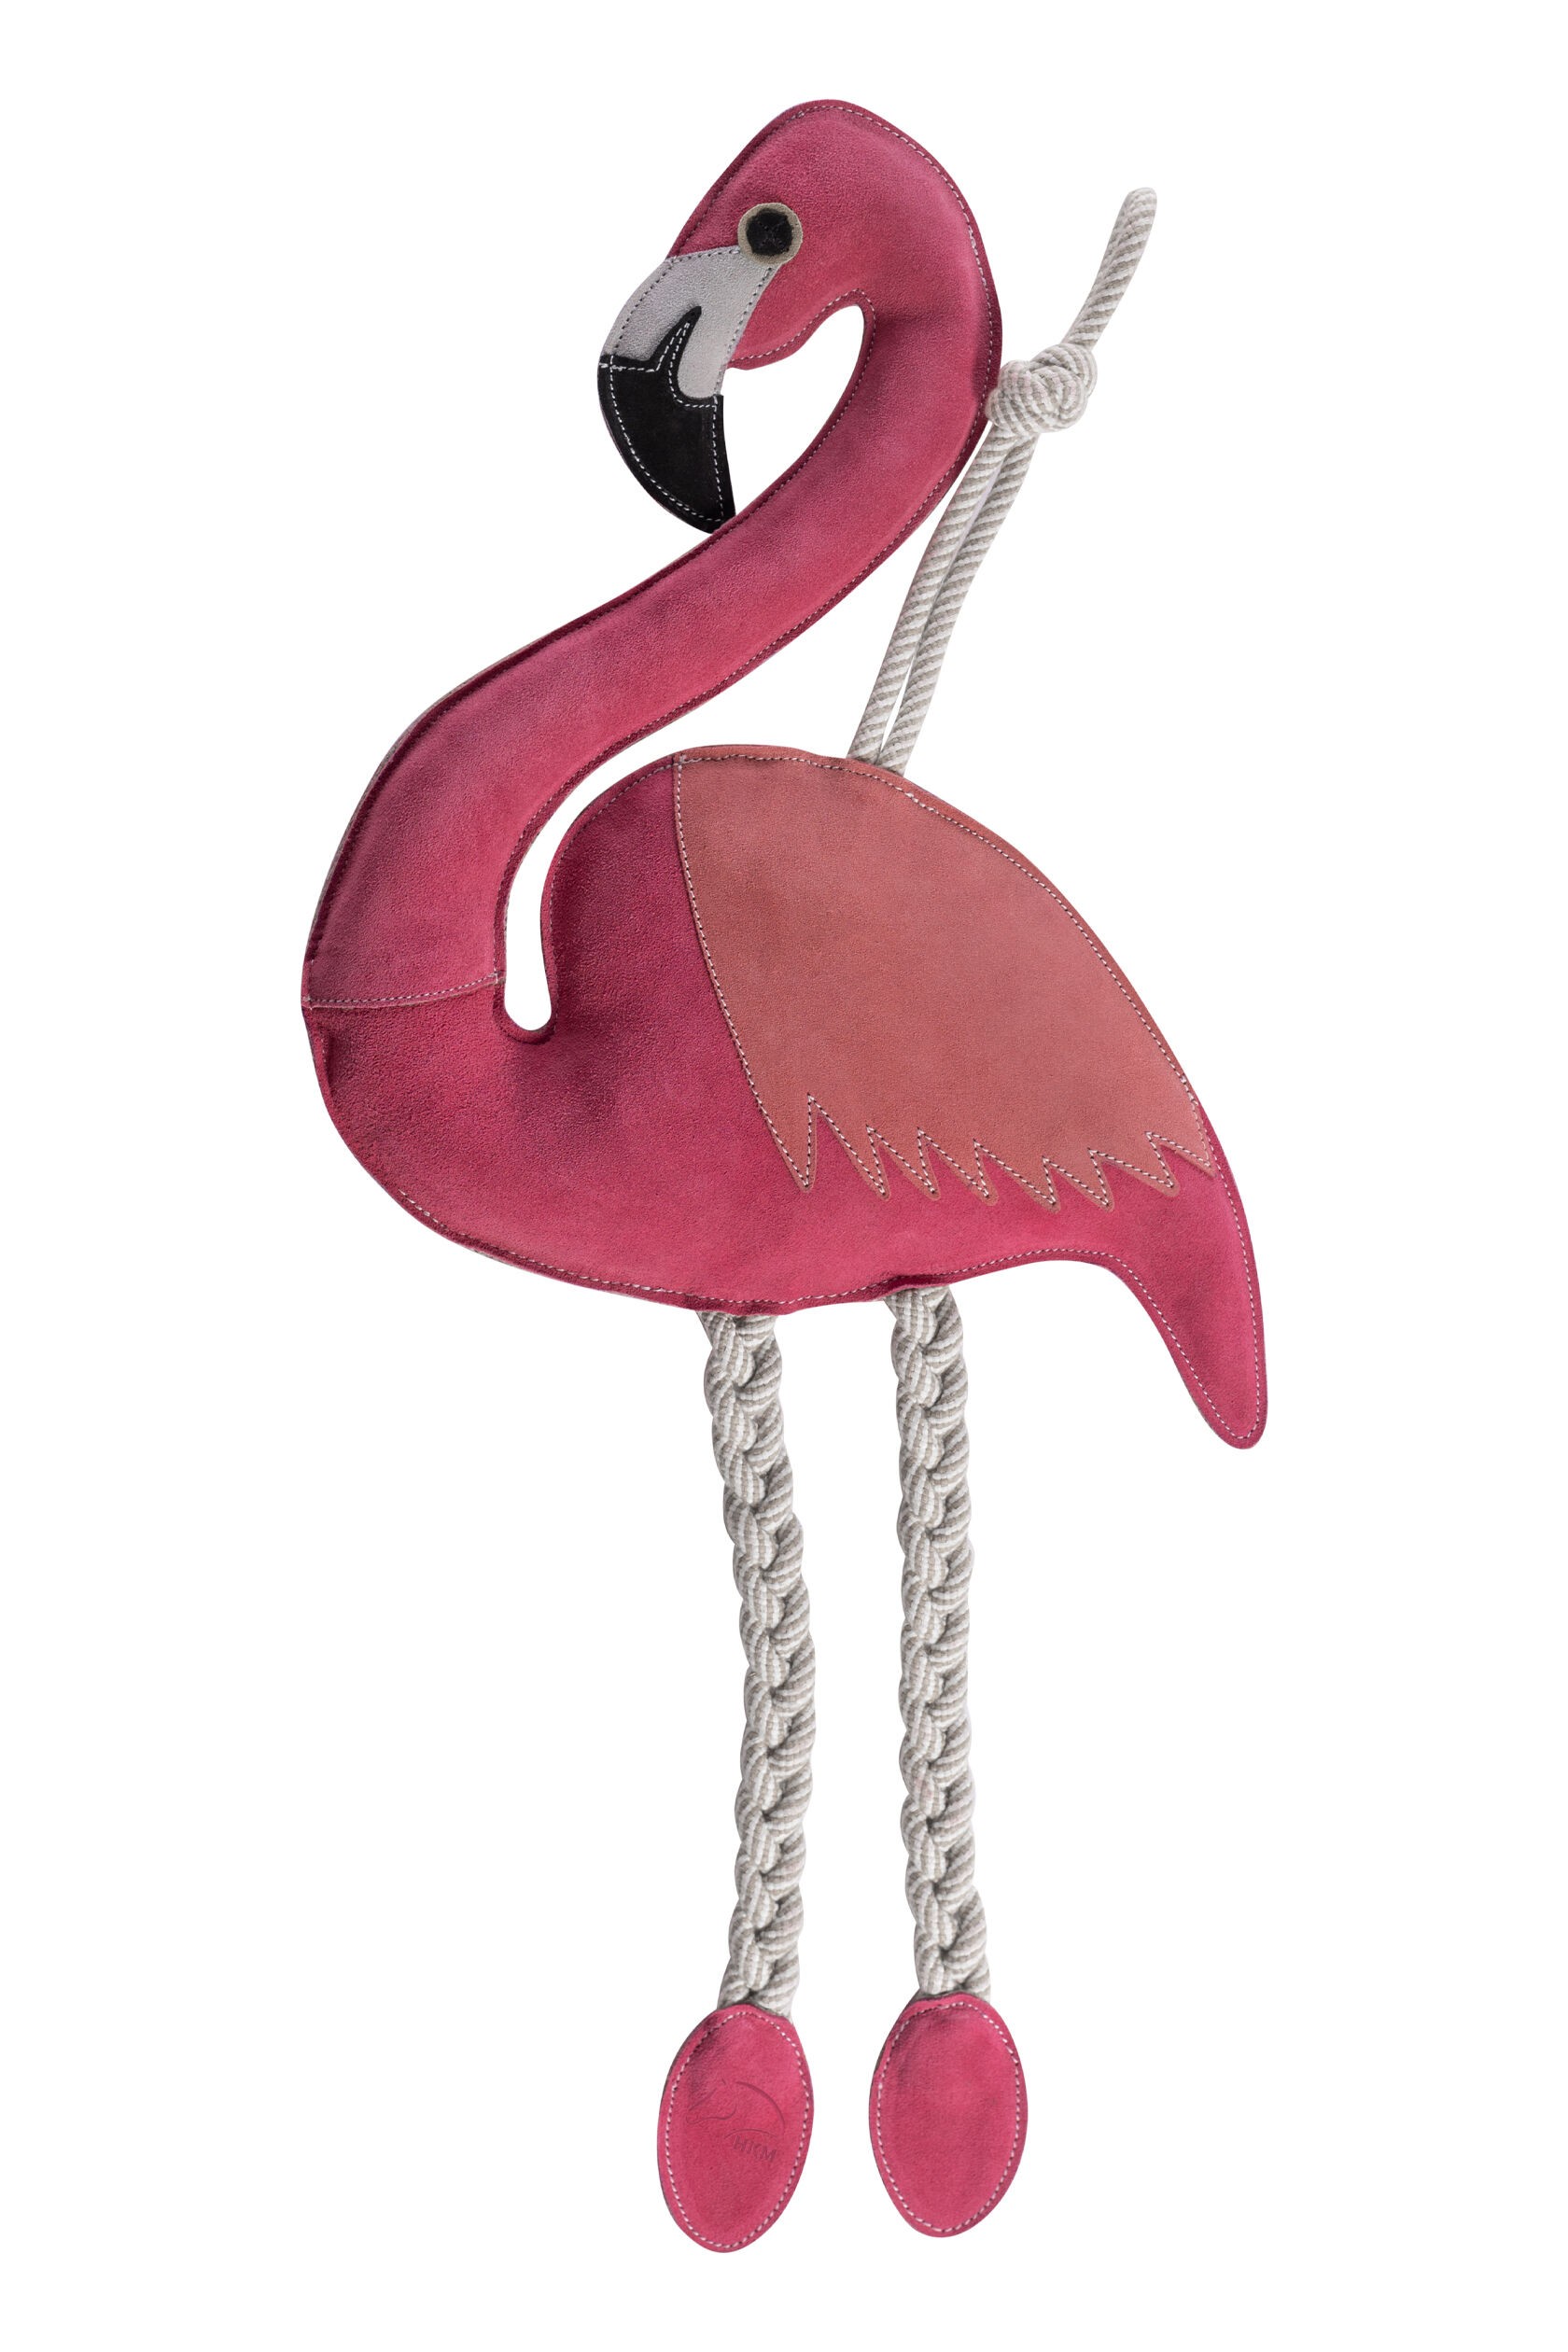  Pferdespielzeug Flamingo